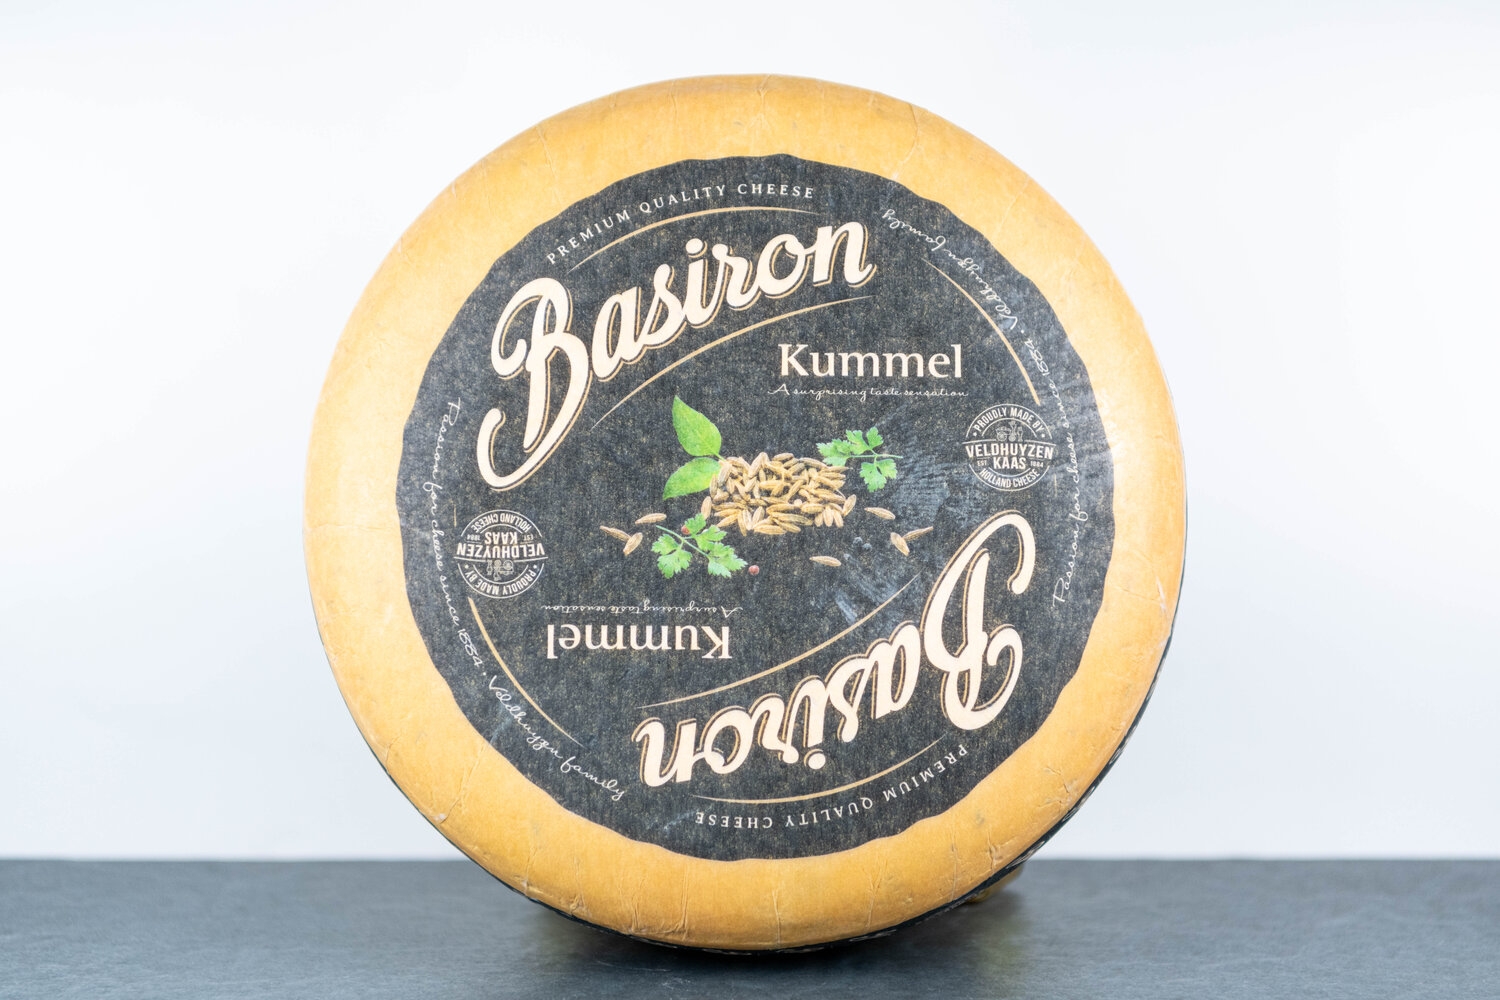 Caraway Basiron Kummel Cheese